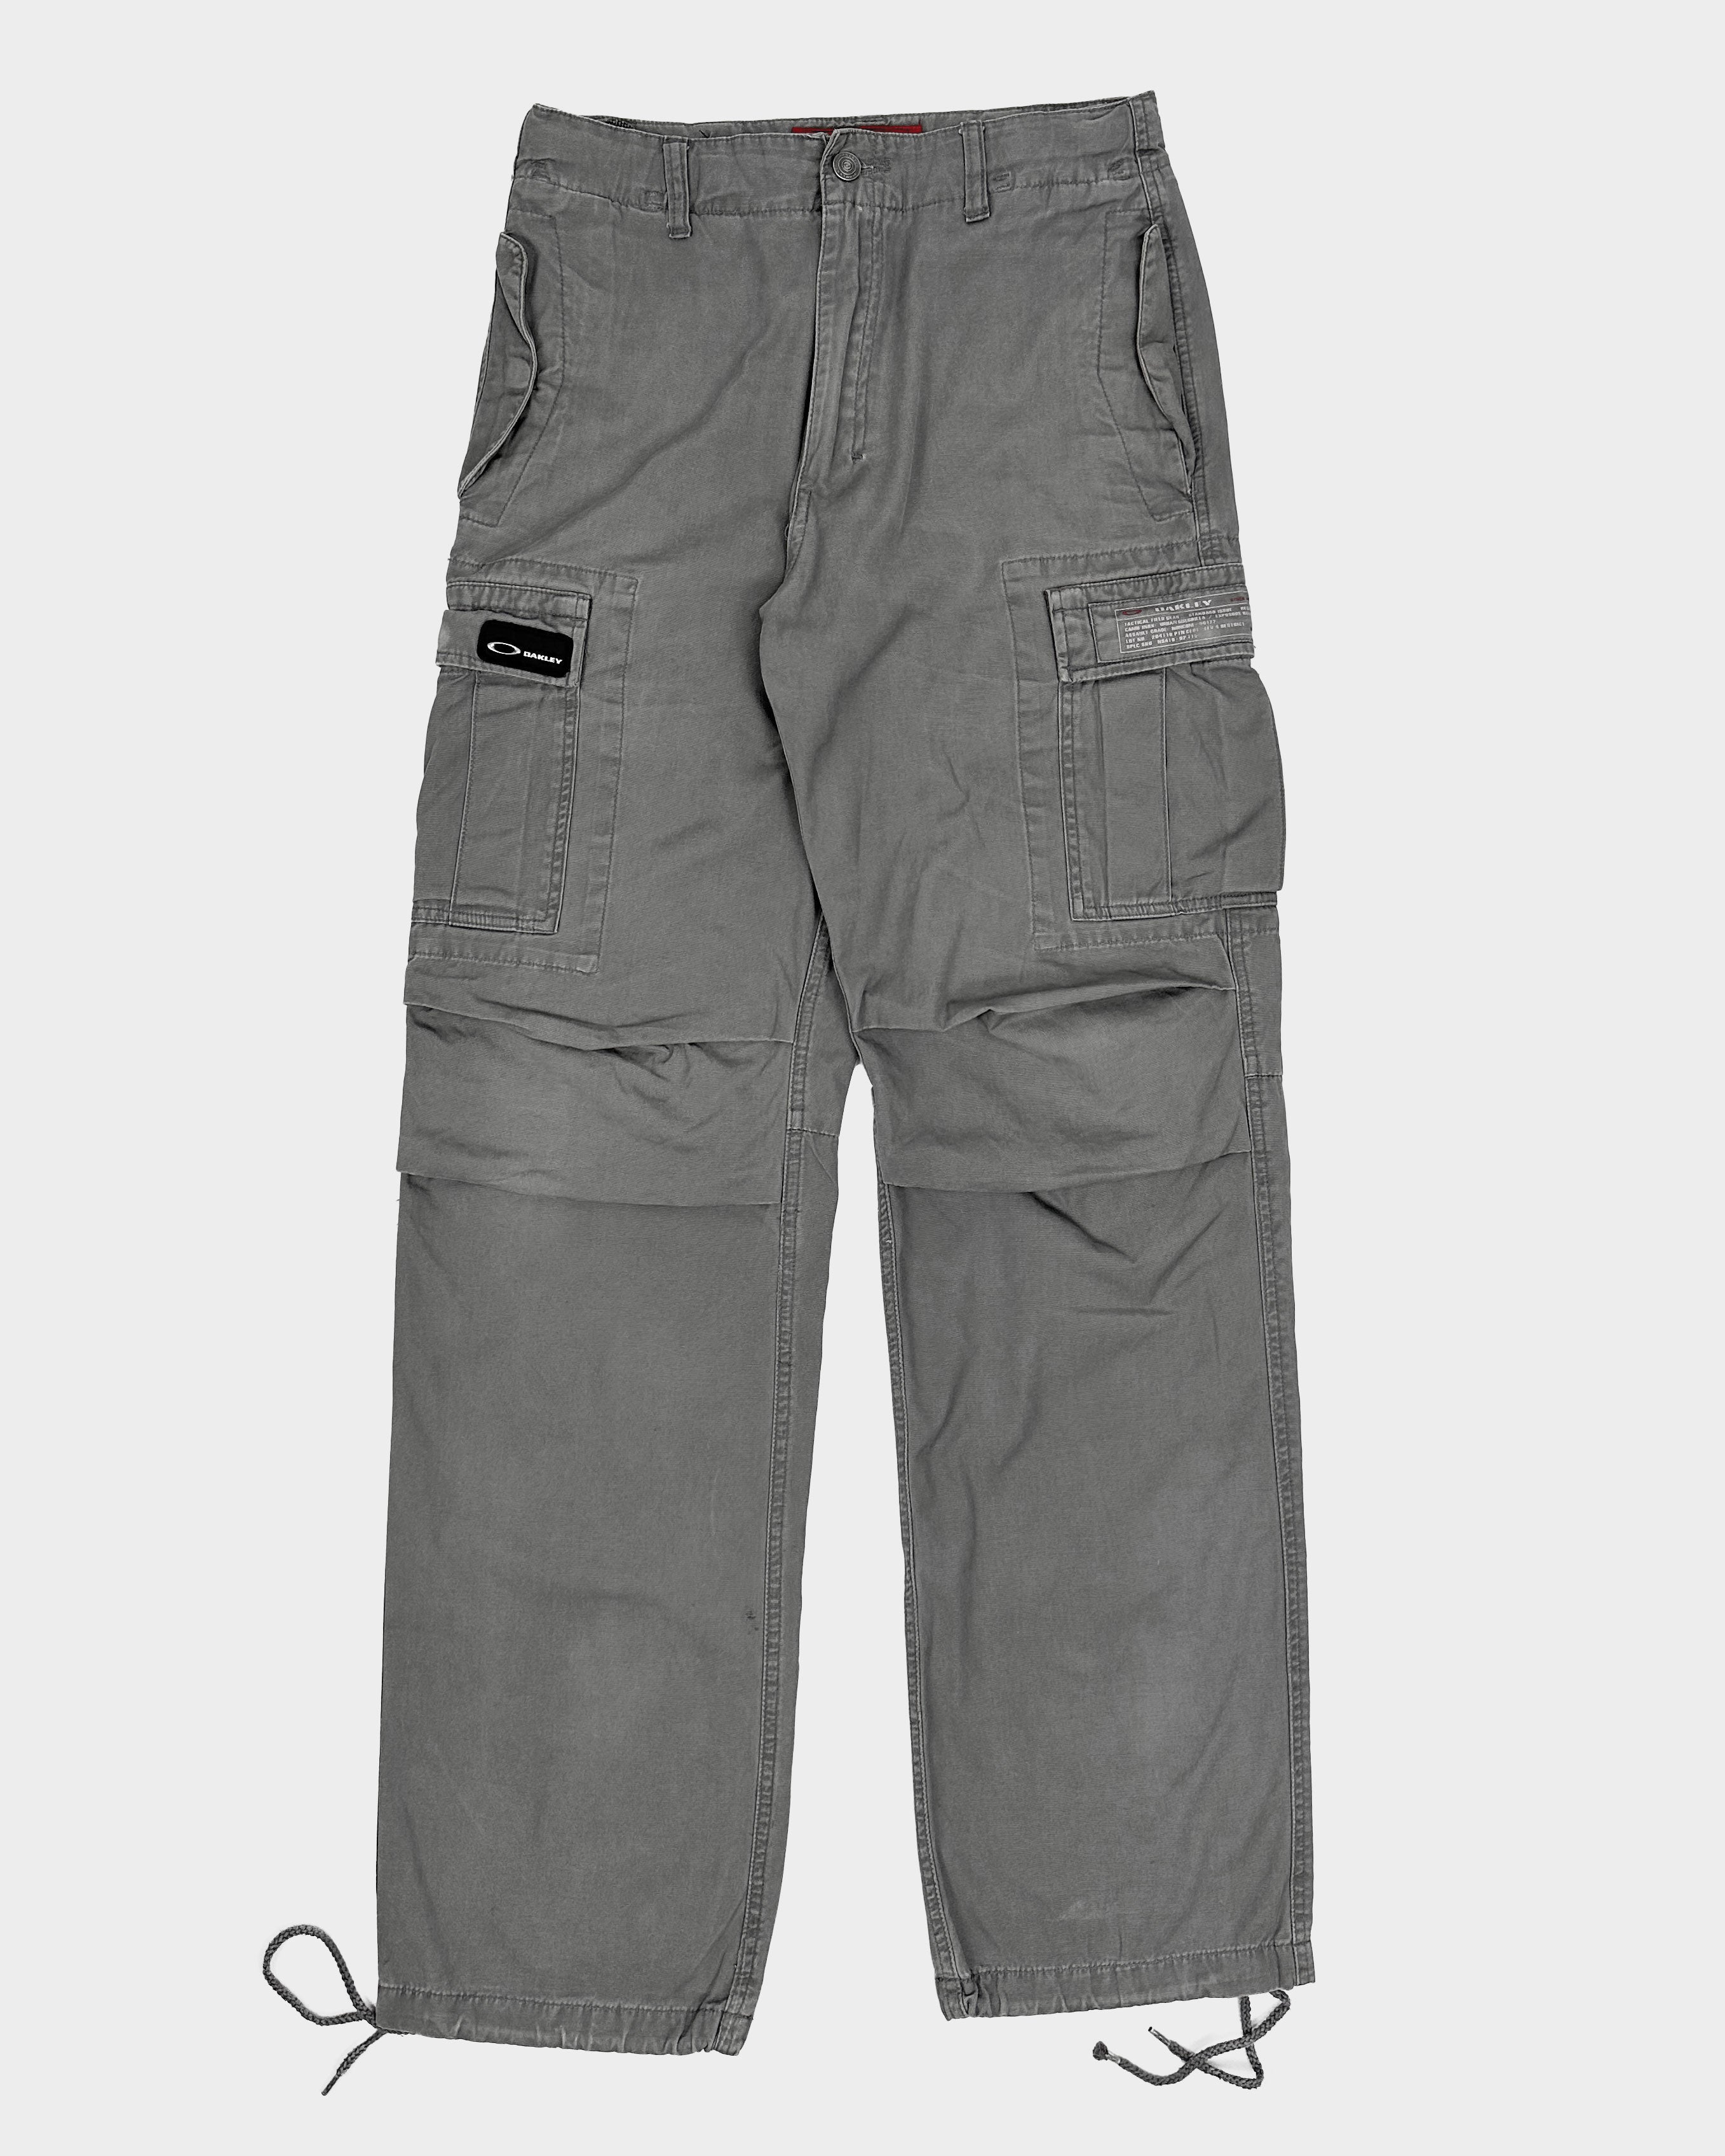 Oakley Red Core Grey Cargo Pants 2000's – Vintage TTS